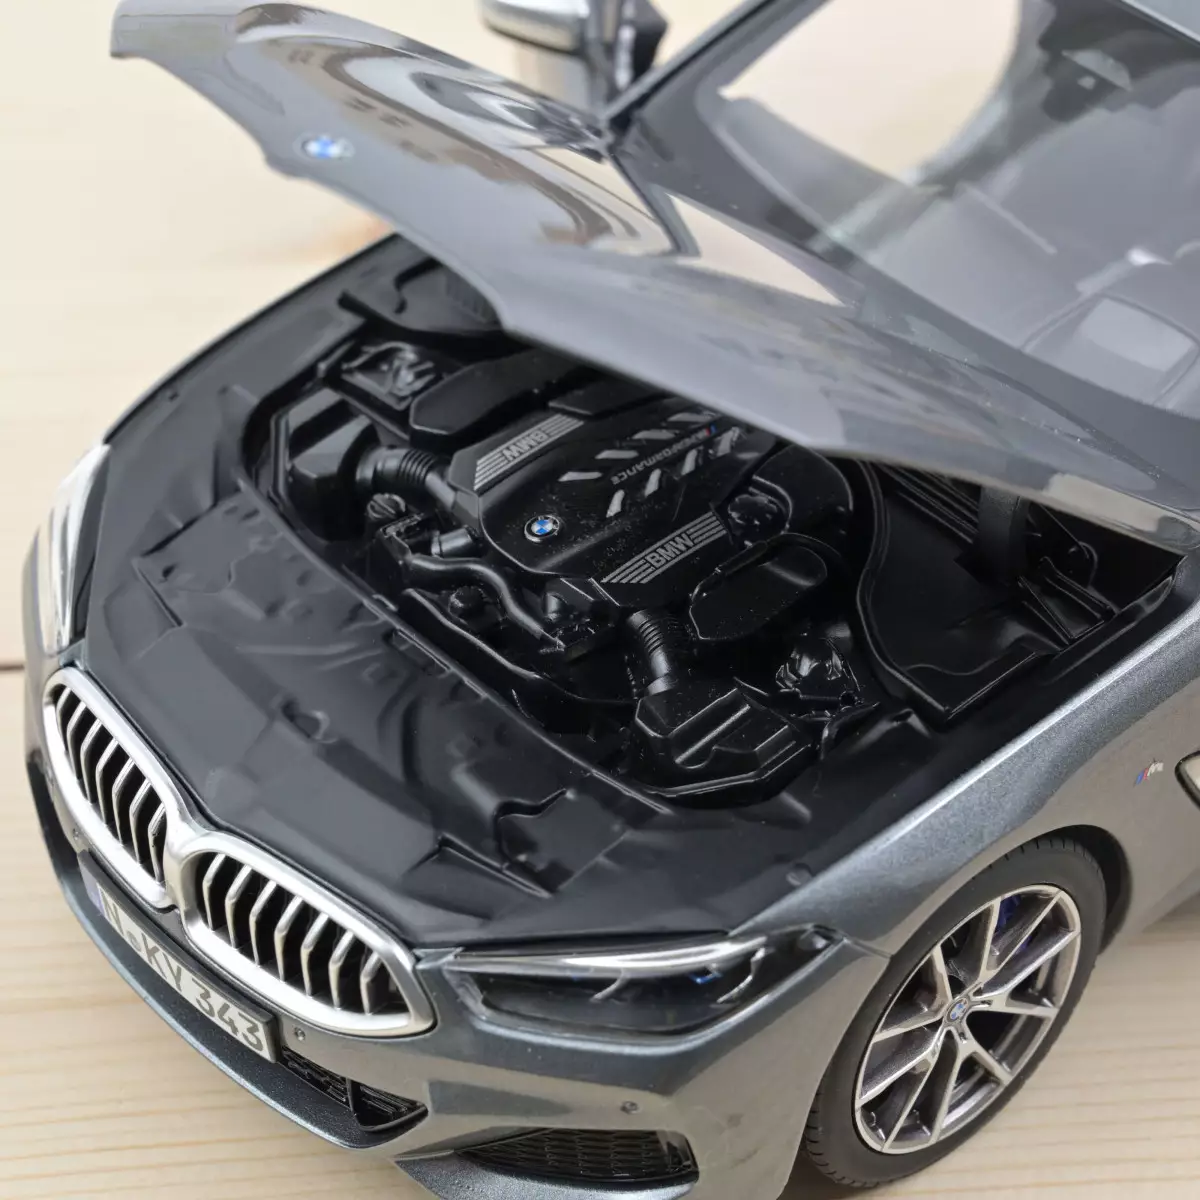 BMW M850i 2019 grau metallic 1:18 Limitiert auf 200 Stück